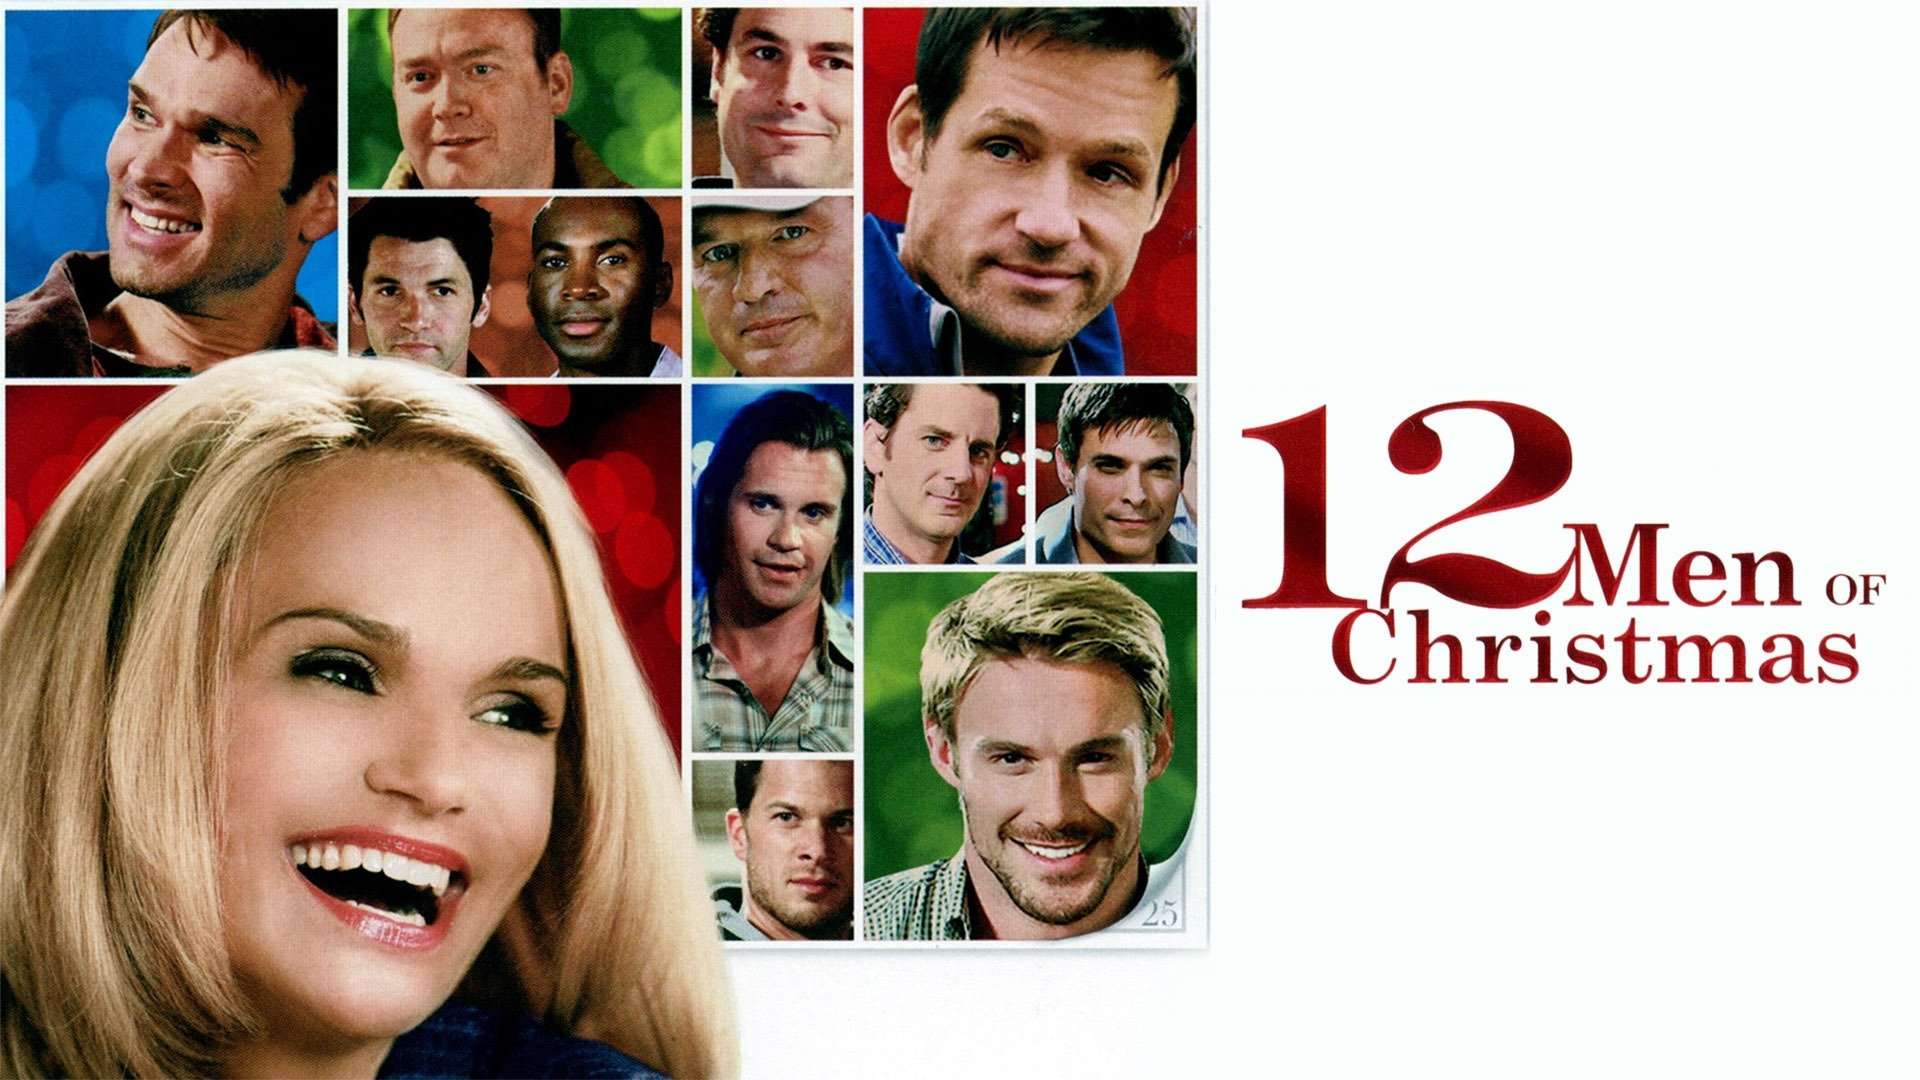 12 Men of Christmas - Rotten Tomatoes